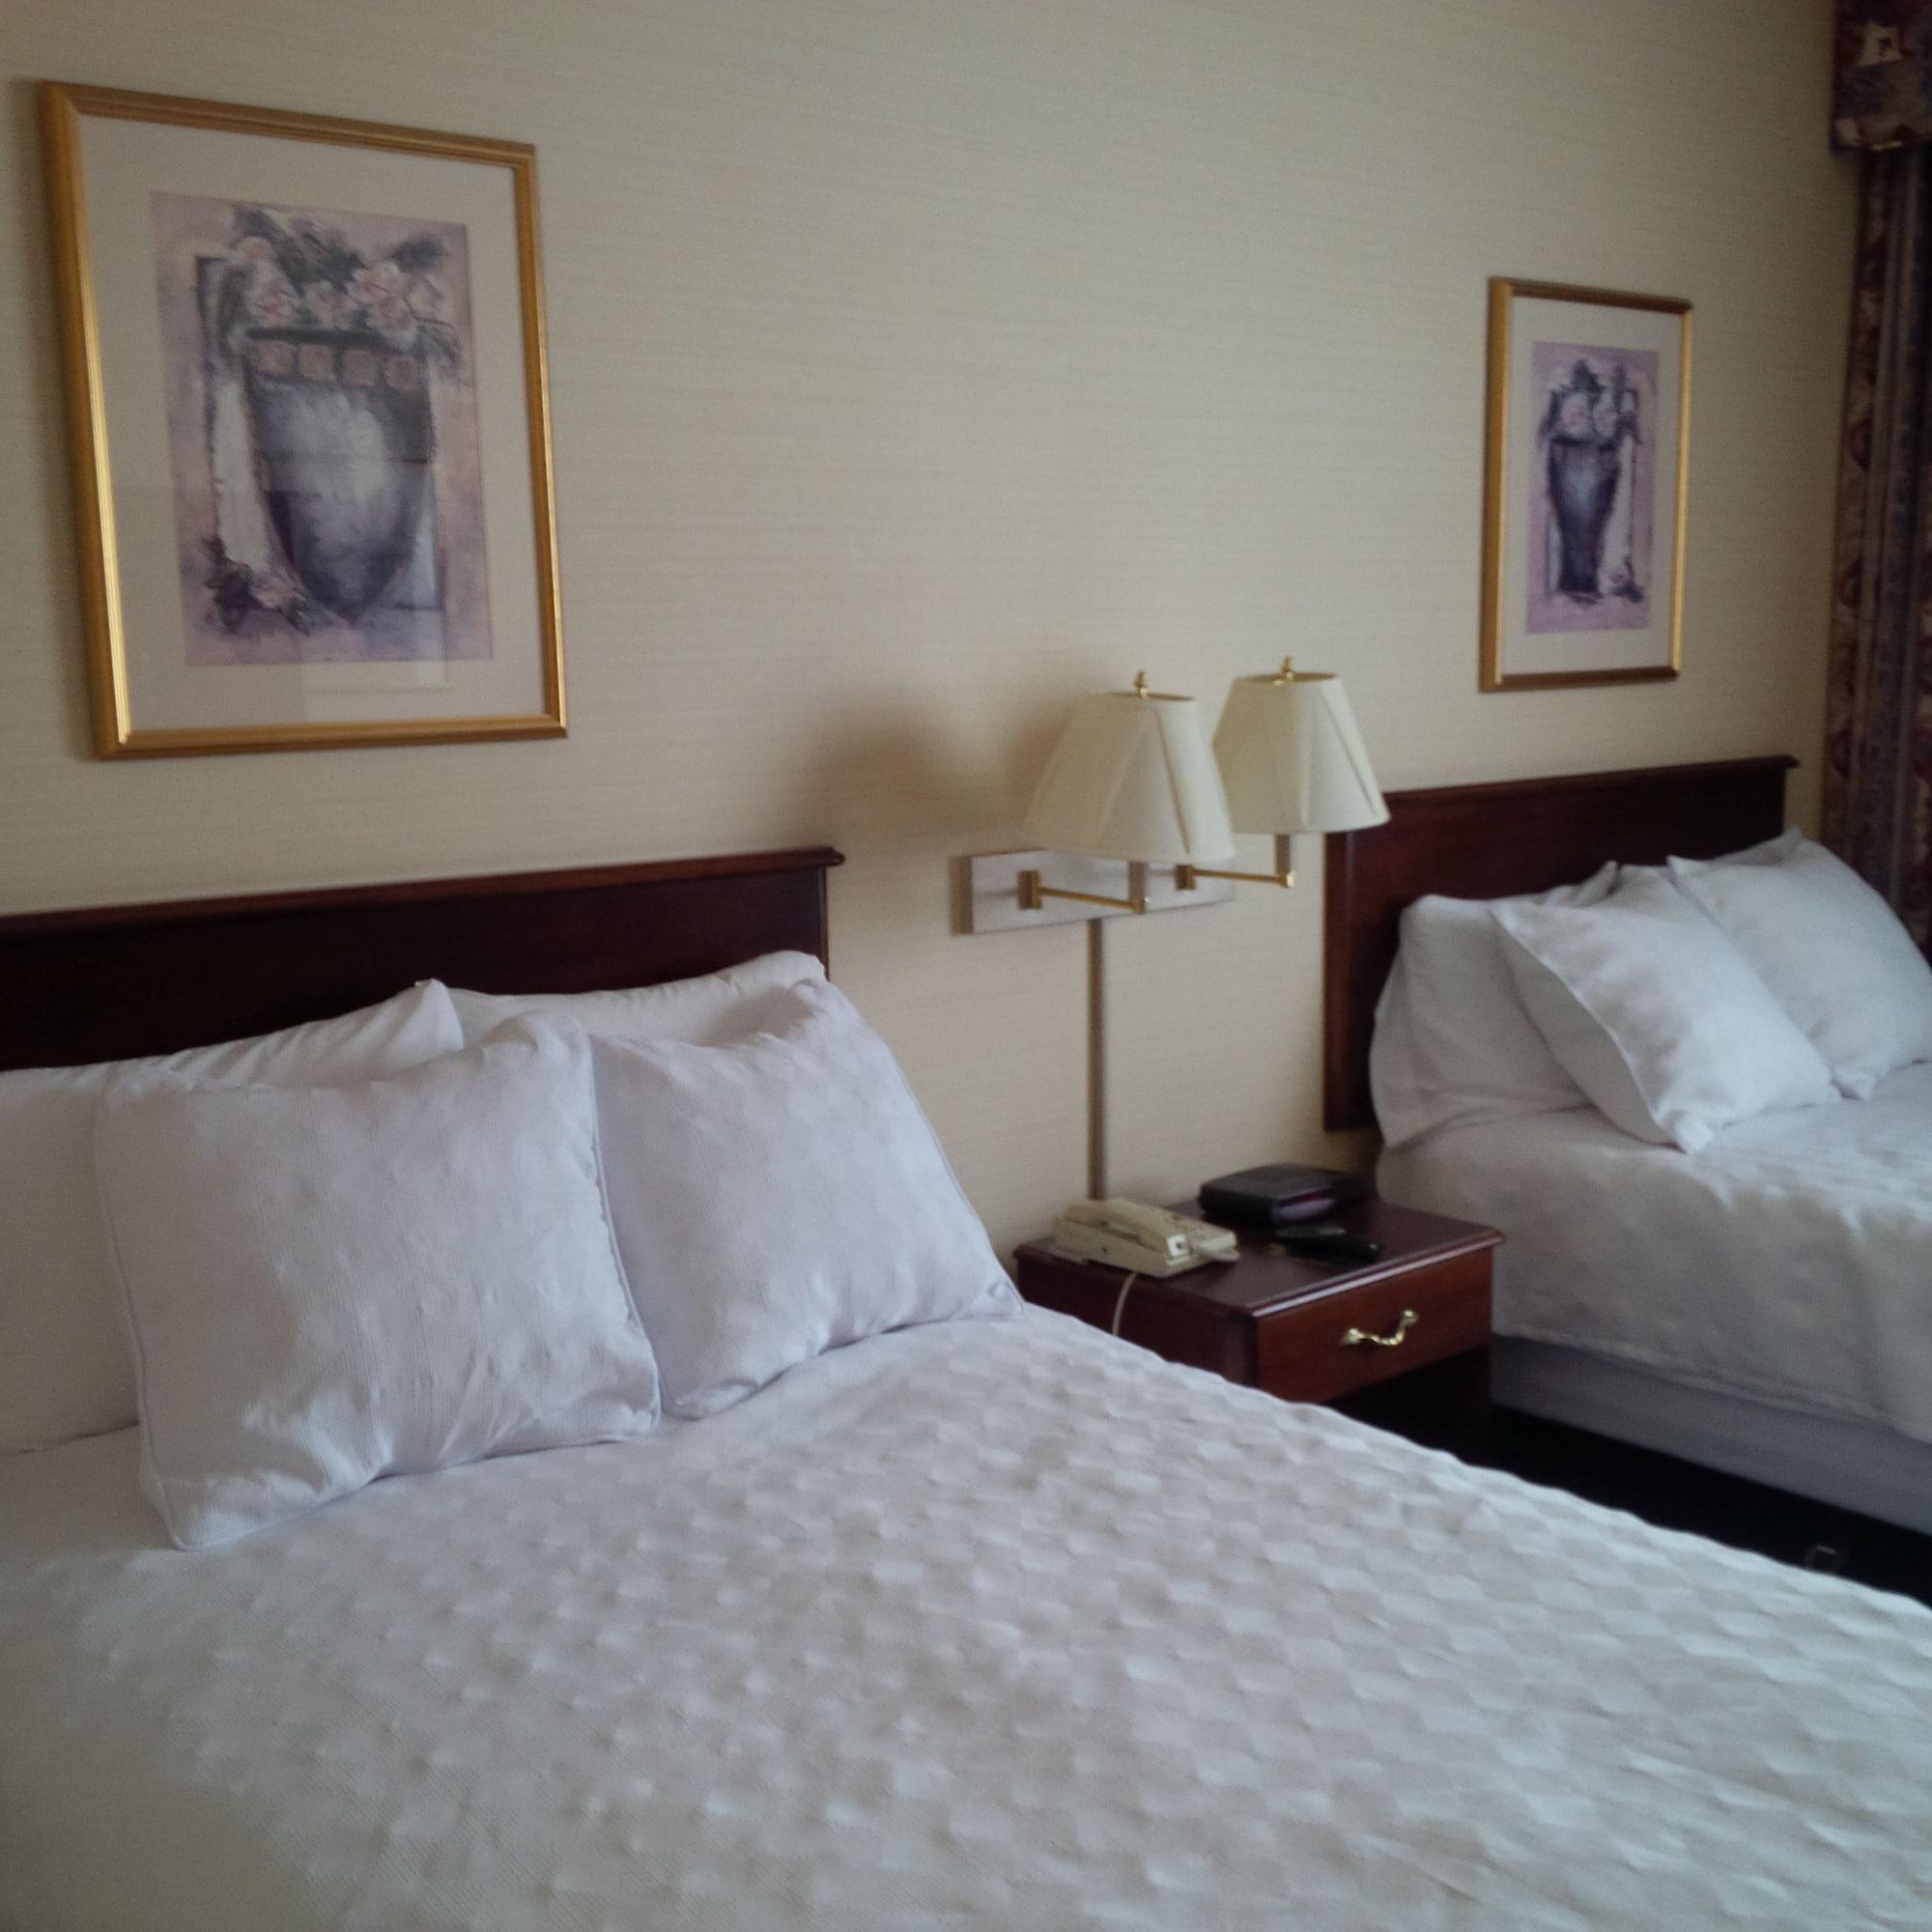 Maron Hotel & Suites Danbury Buitenkant foto